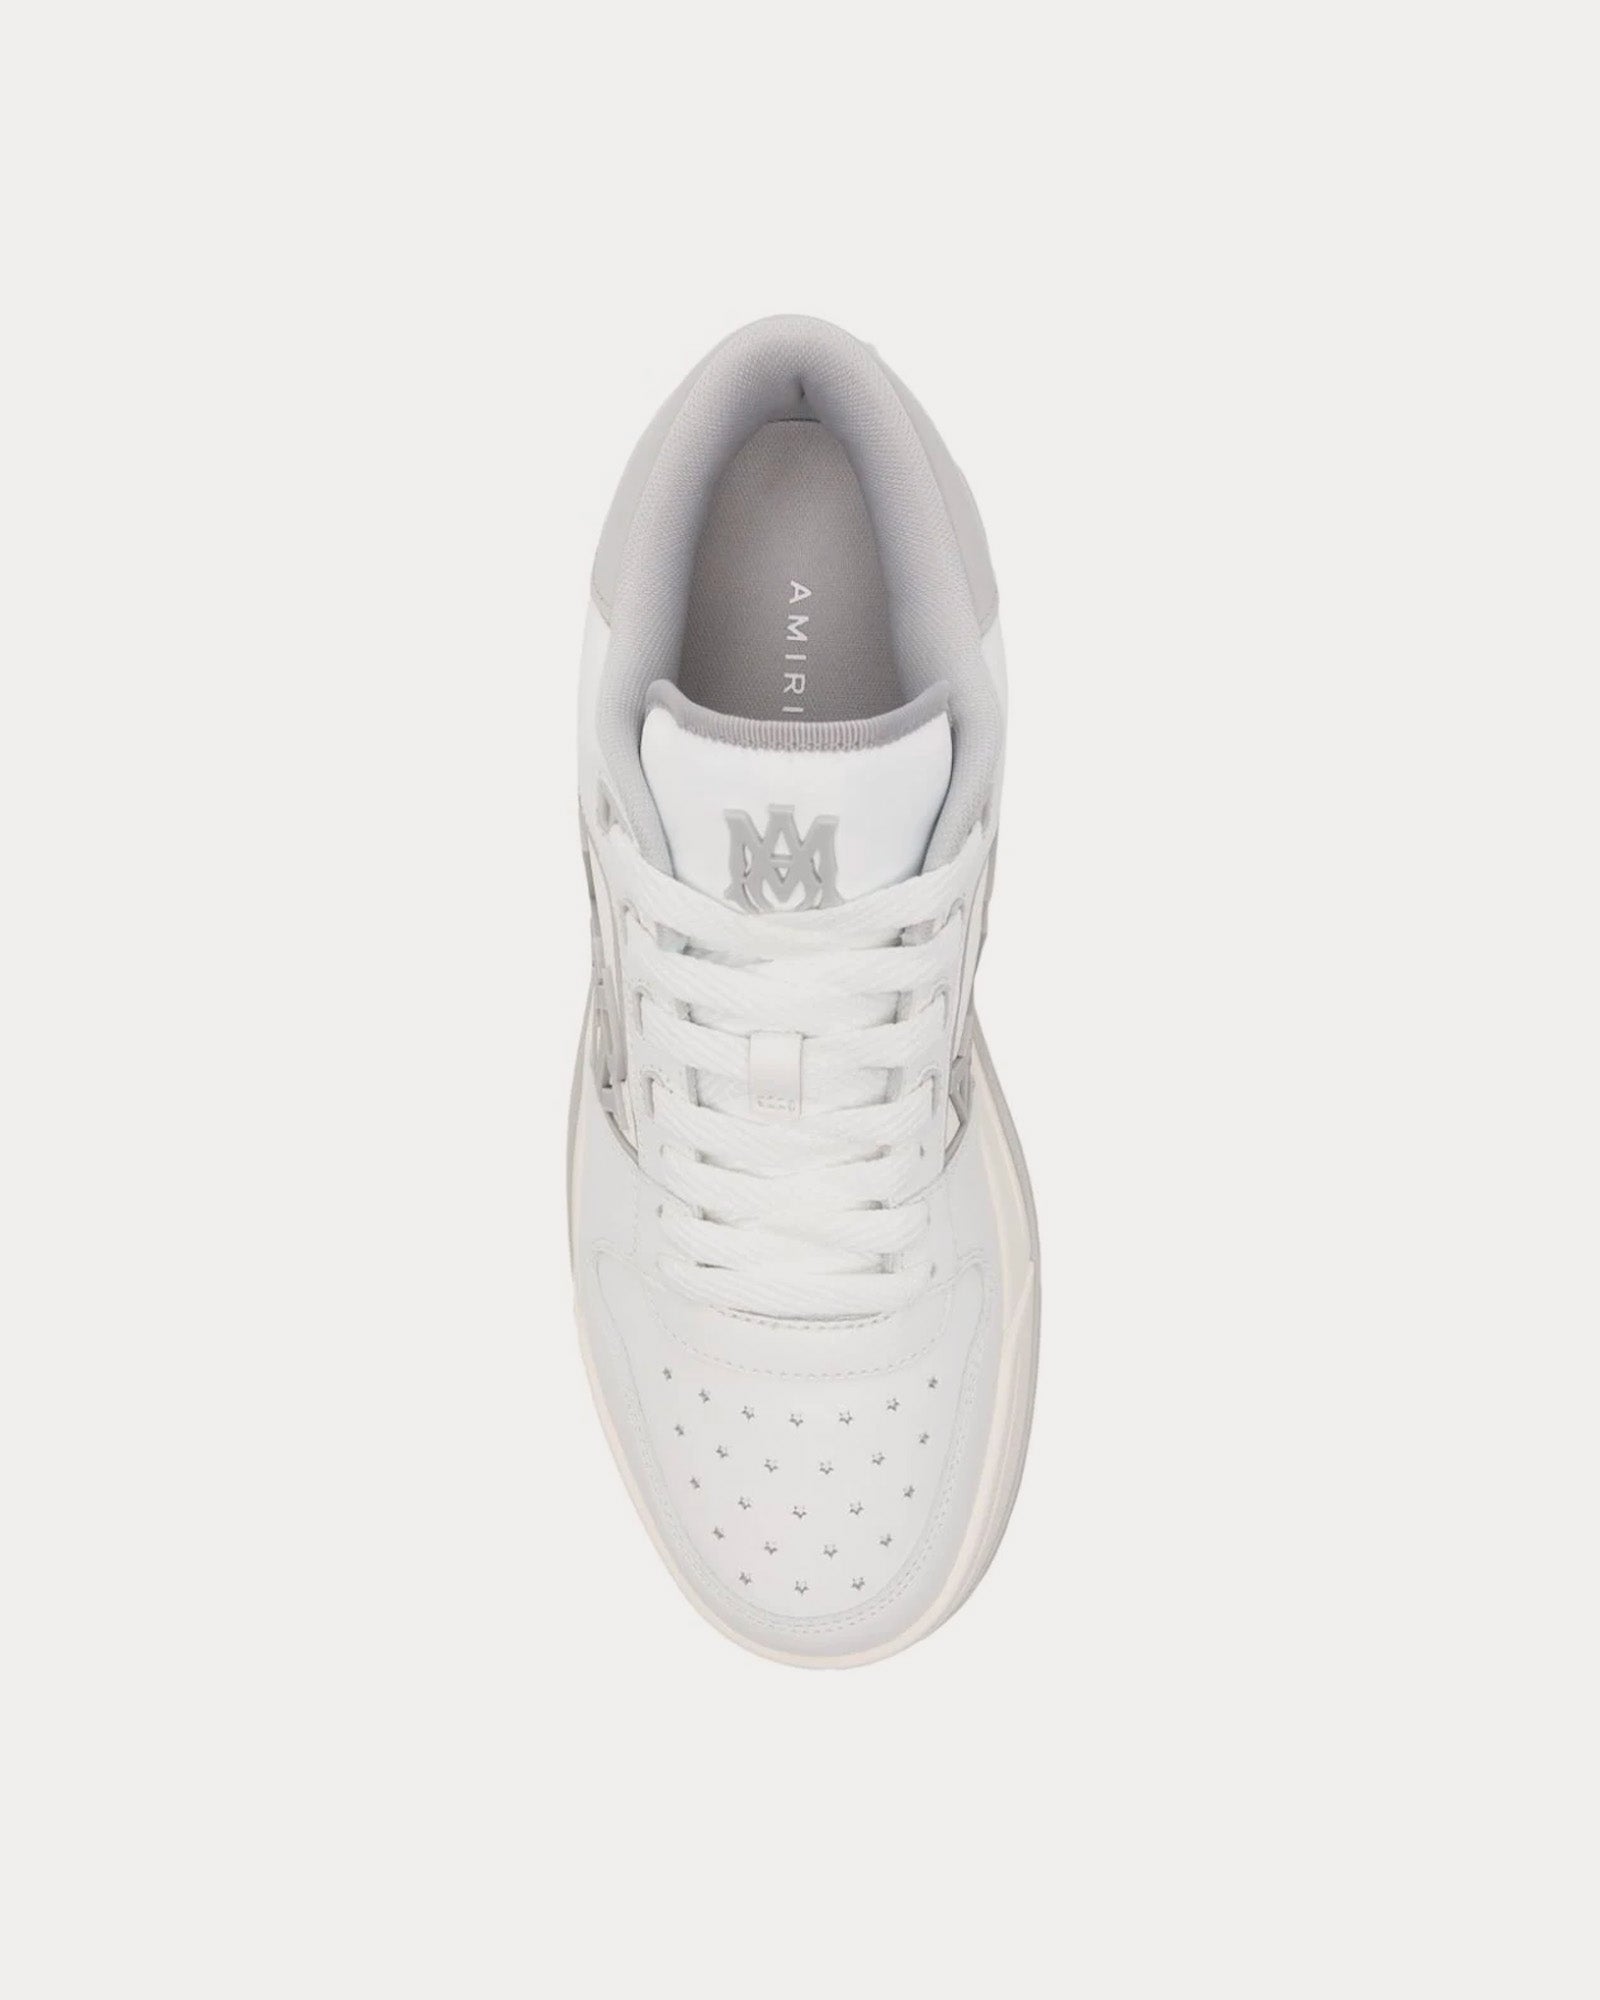 AMIRI - Classic White / Grey Low Top Sneakers